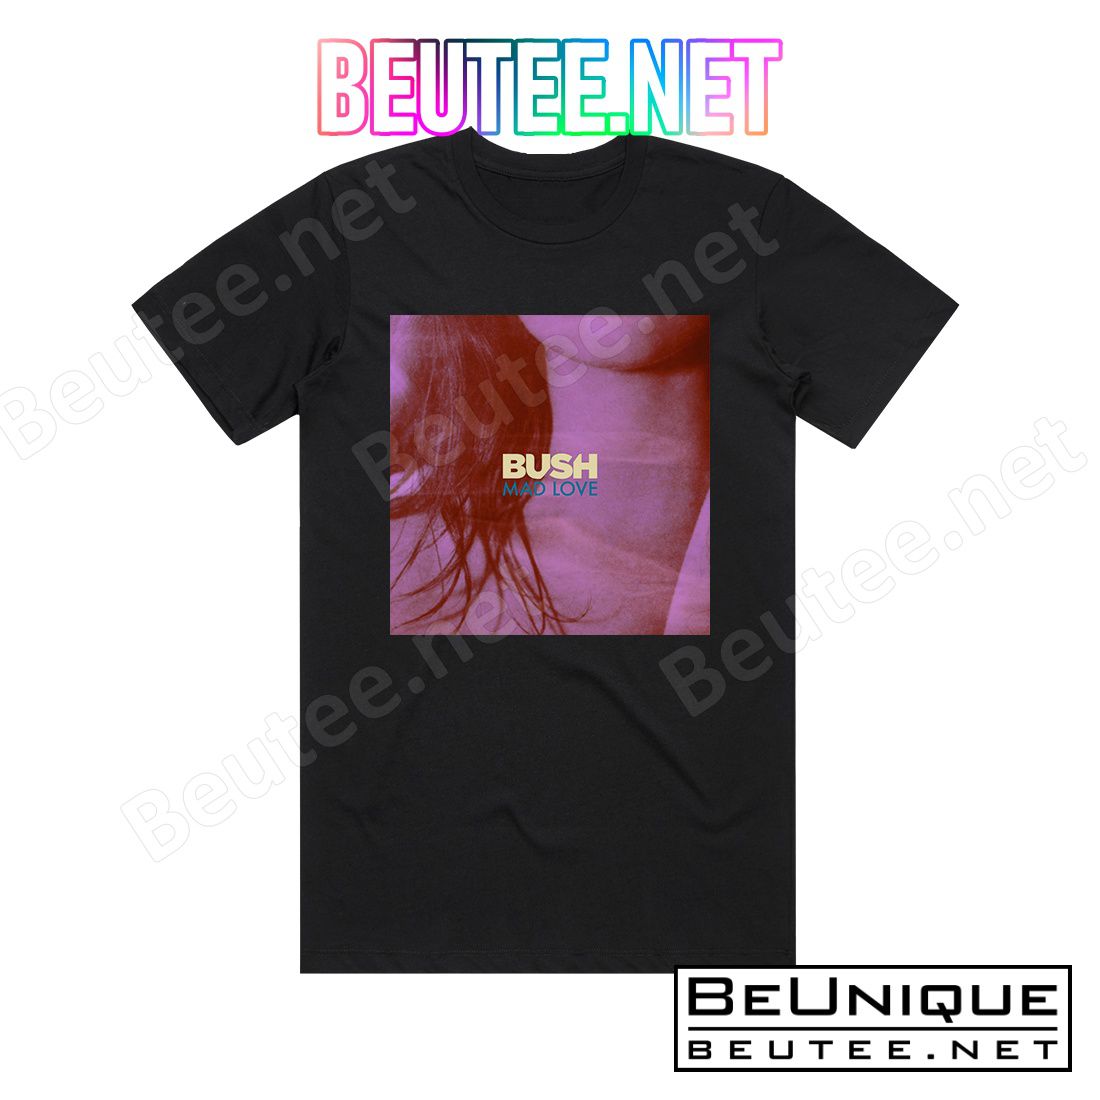 Bush Mad Love Album Cover T-Shirt